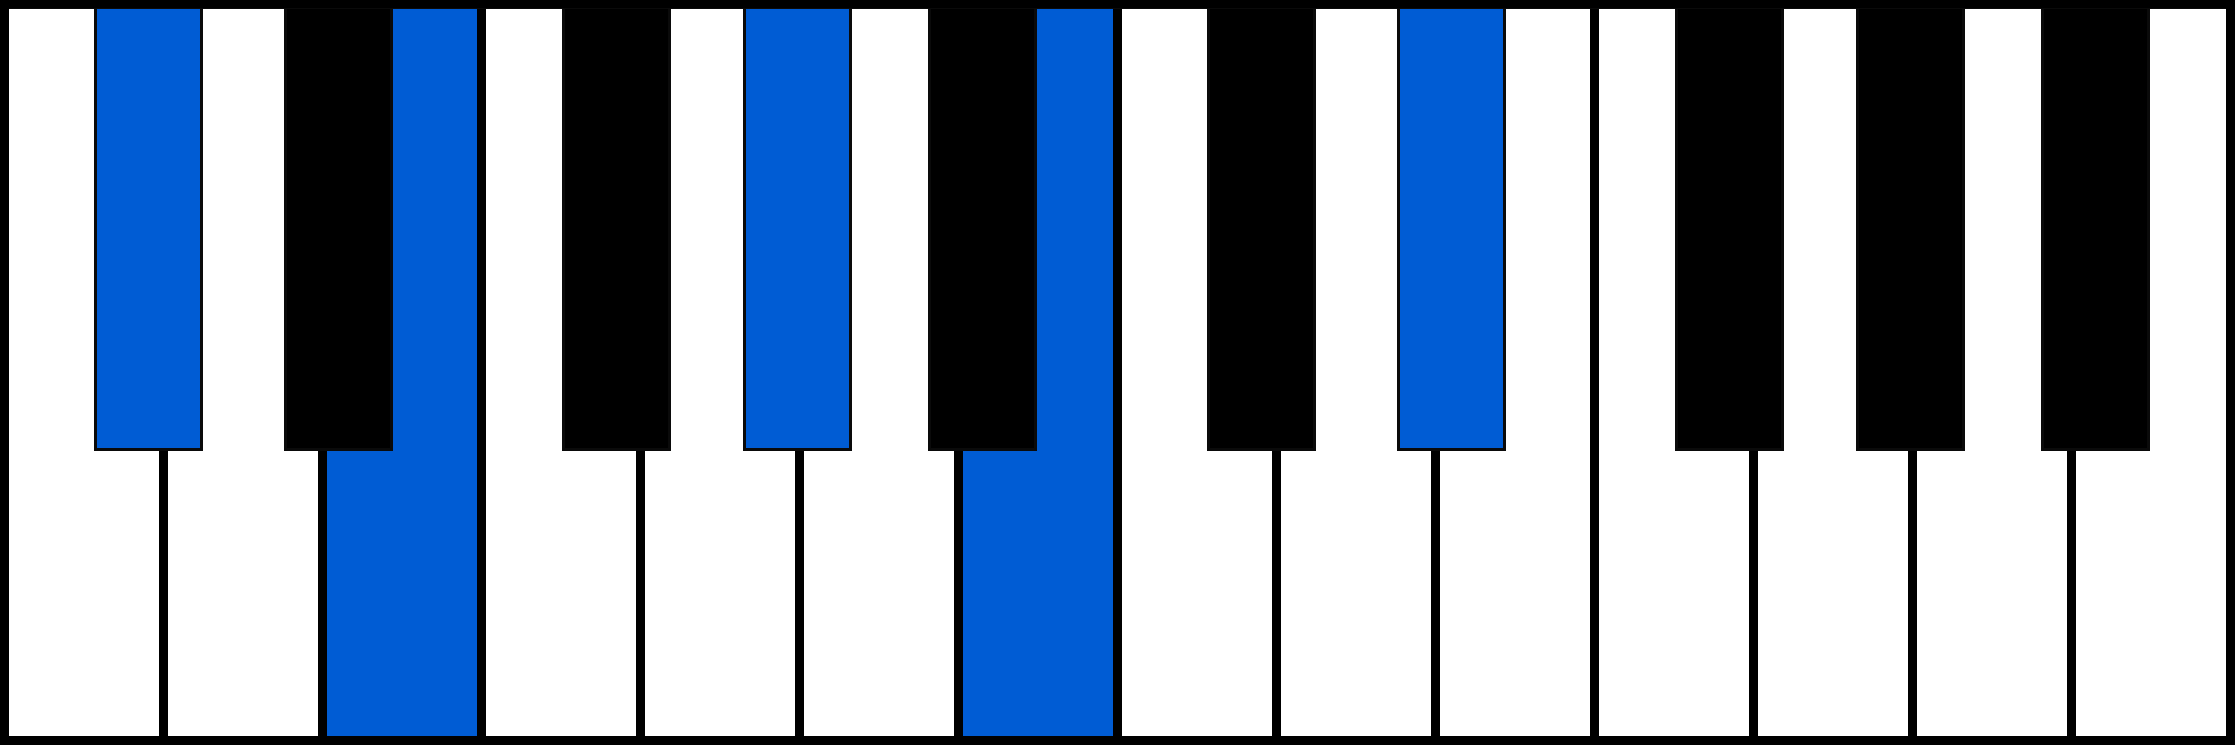 C#m9 piano chord